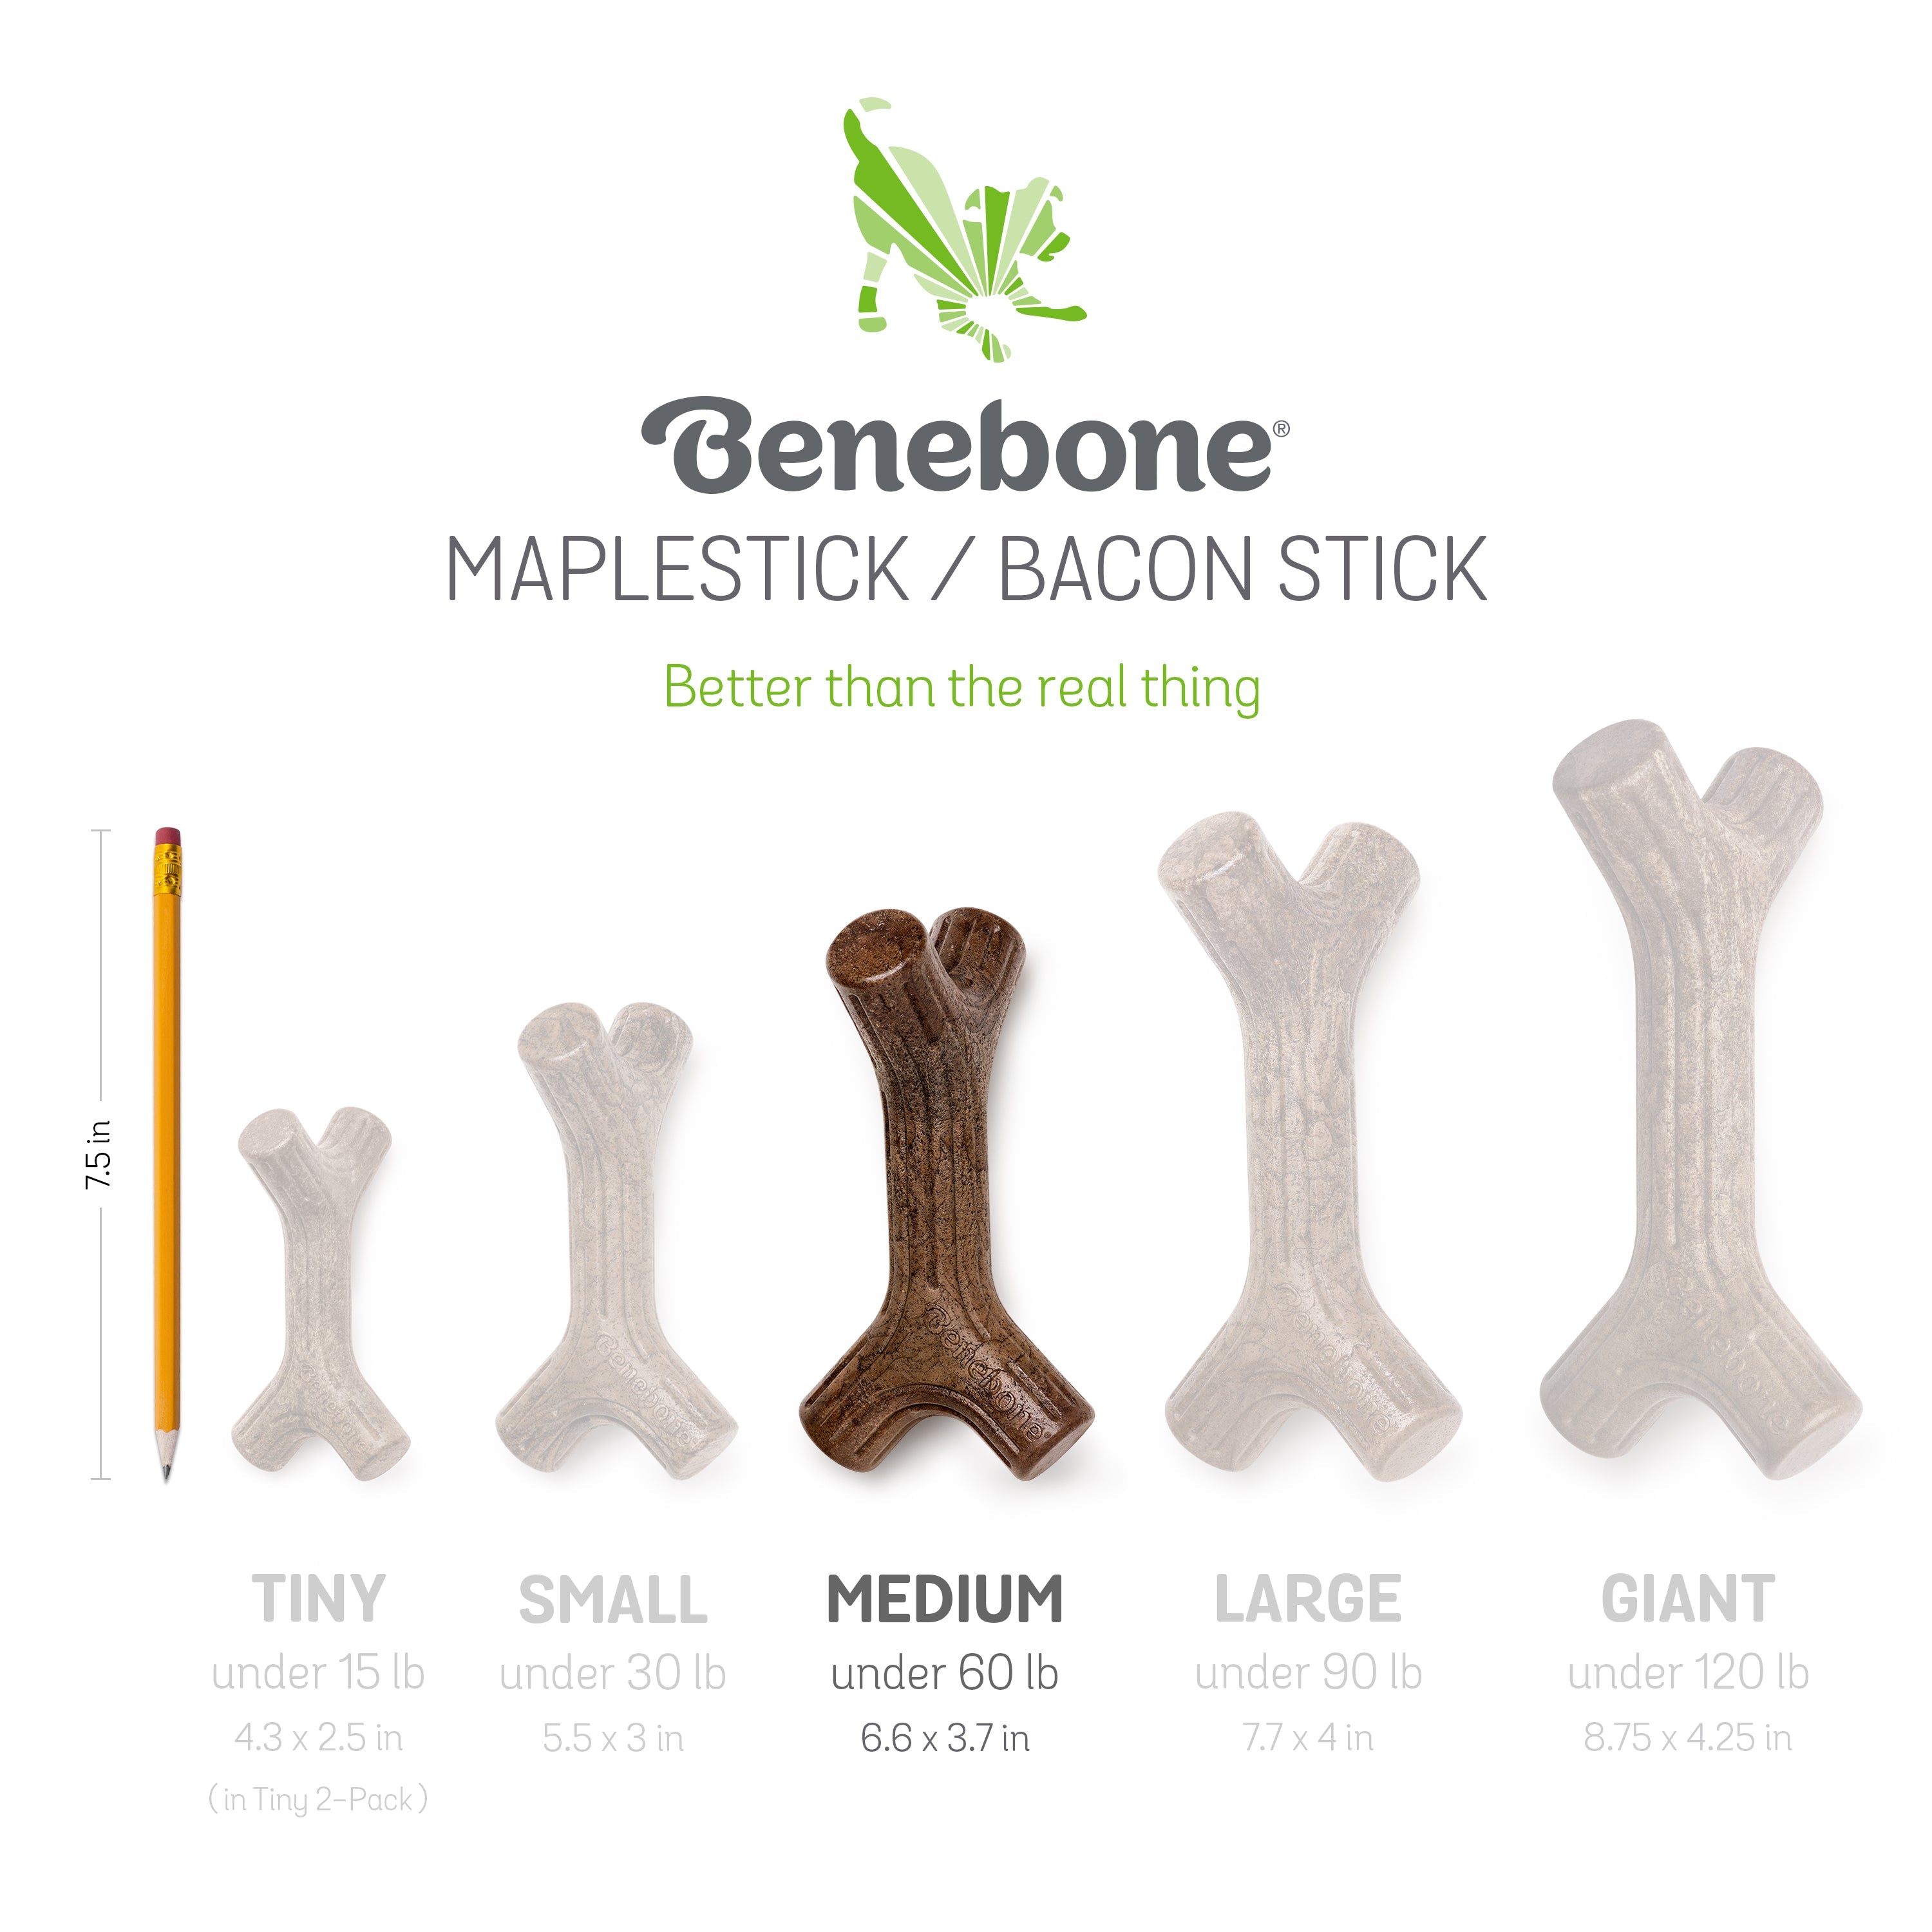 Benebone's Bacon Stick Durable Dog Chew